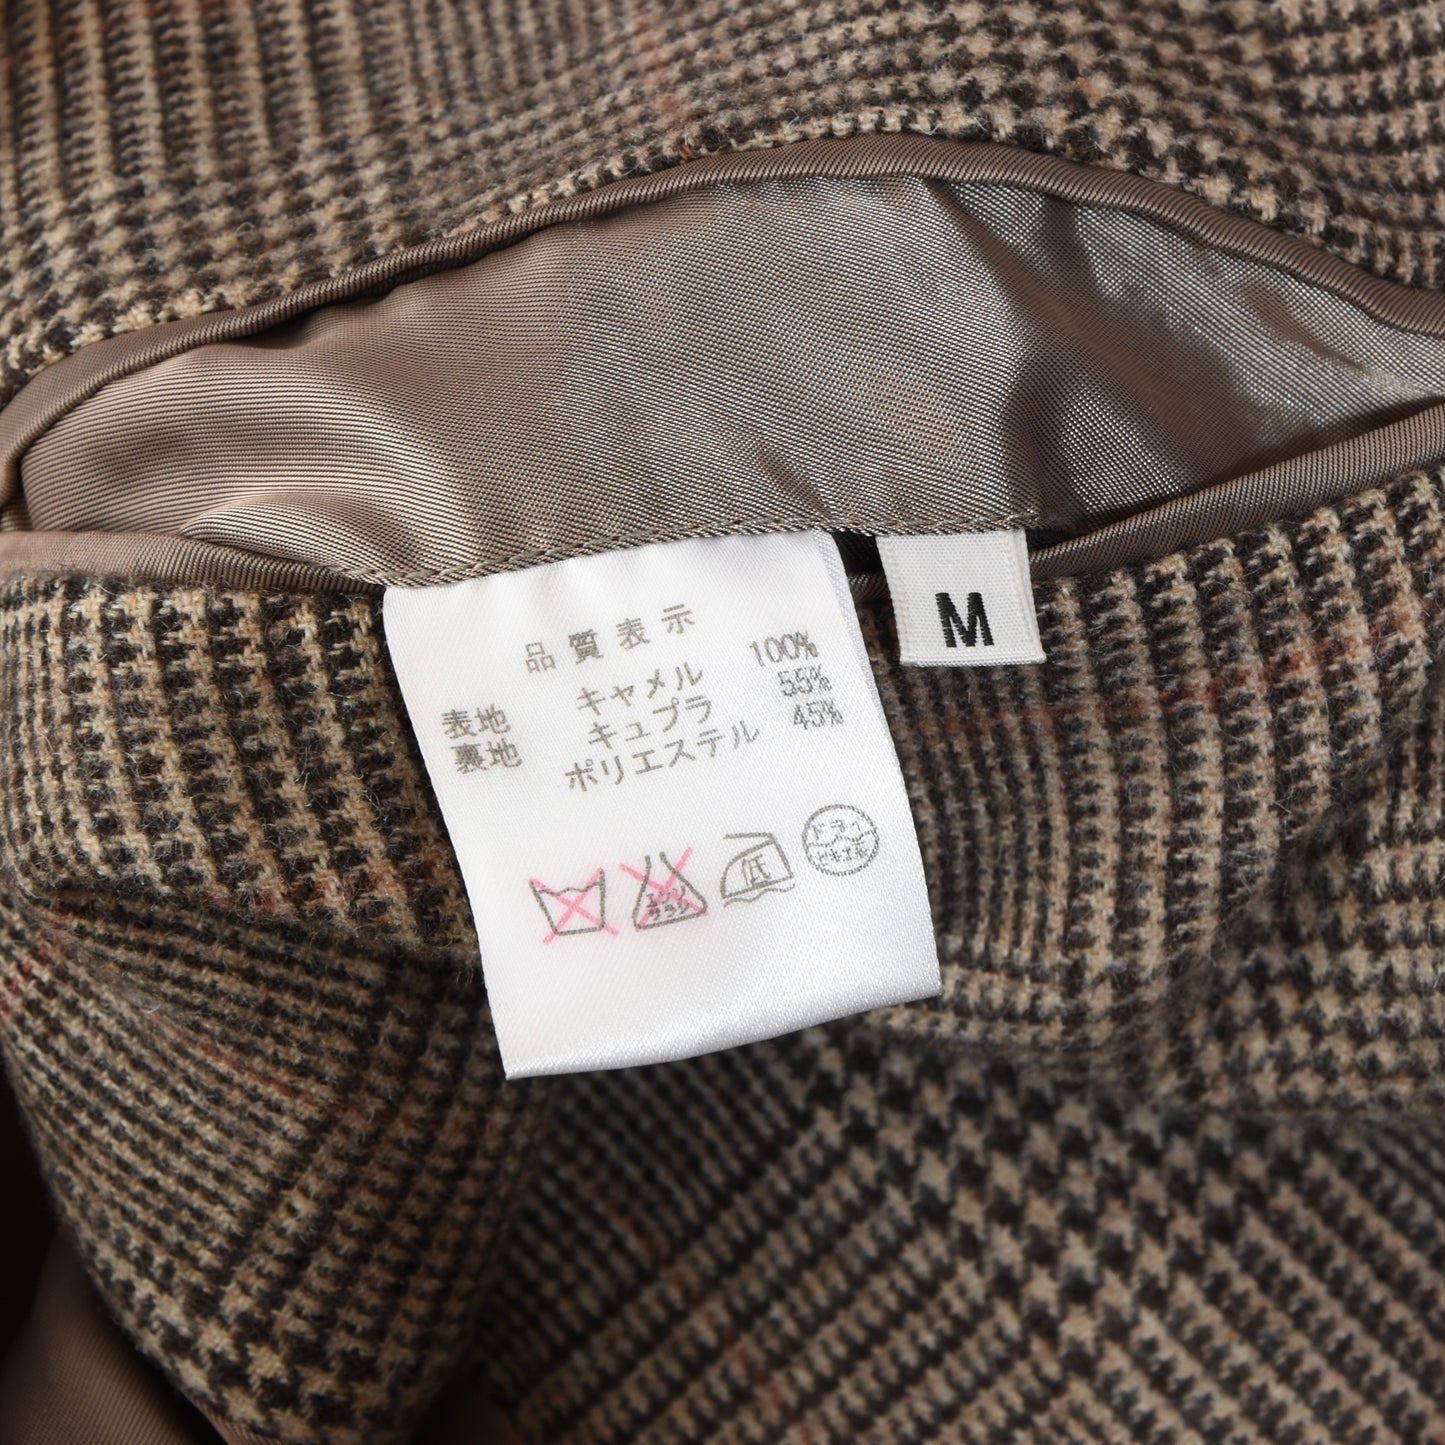 Maker's Shirt Kamakura Camel Hair Jacket ca. 50cm Chest - Prince of Wales